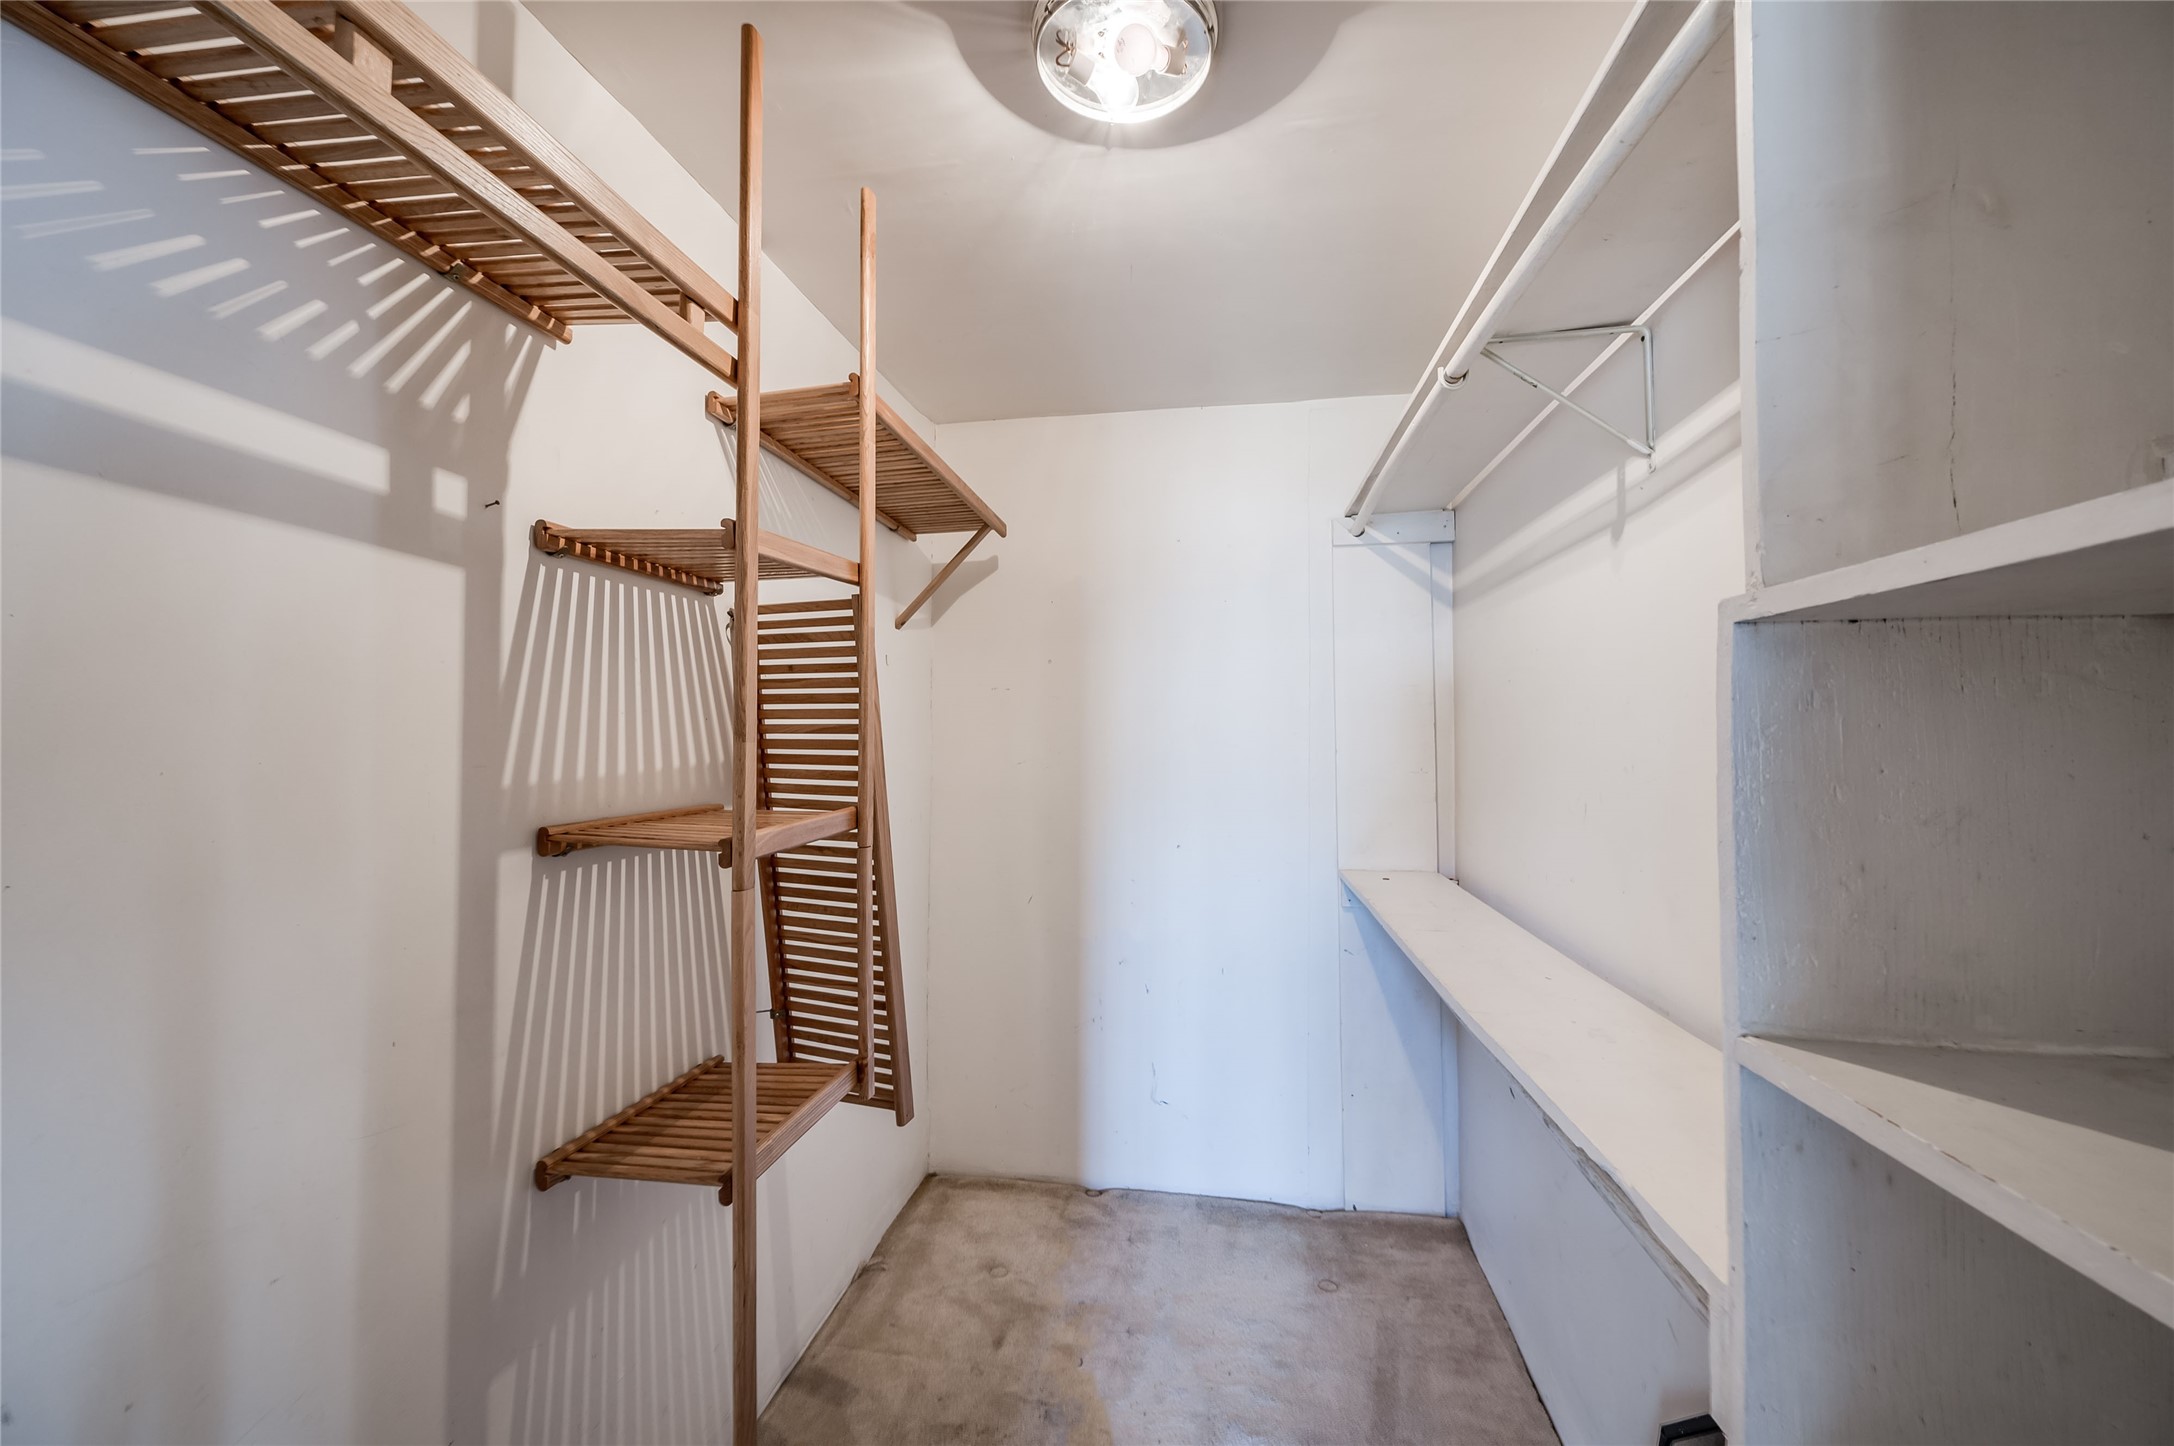 Loft sleeping quarters or storage space above garage apartment.